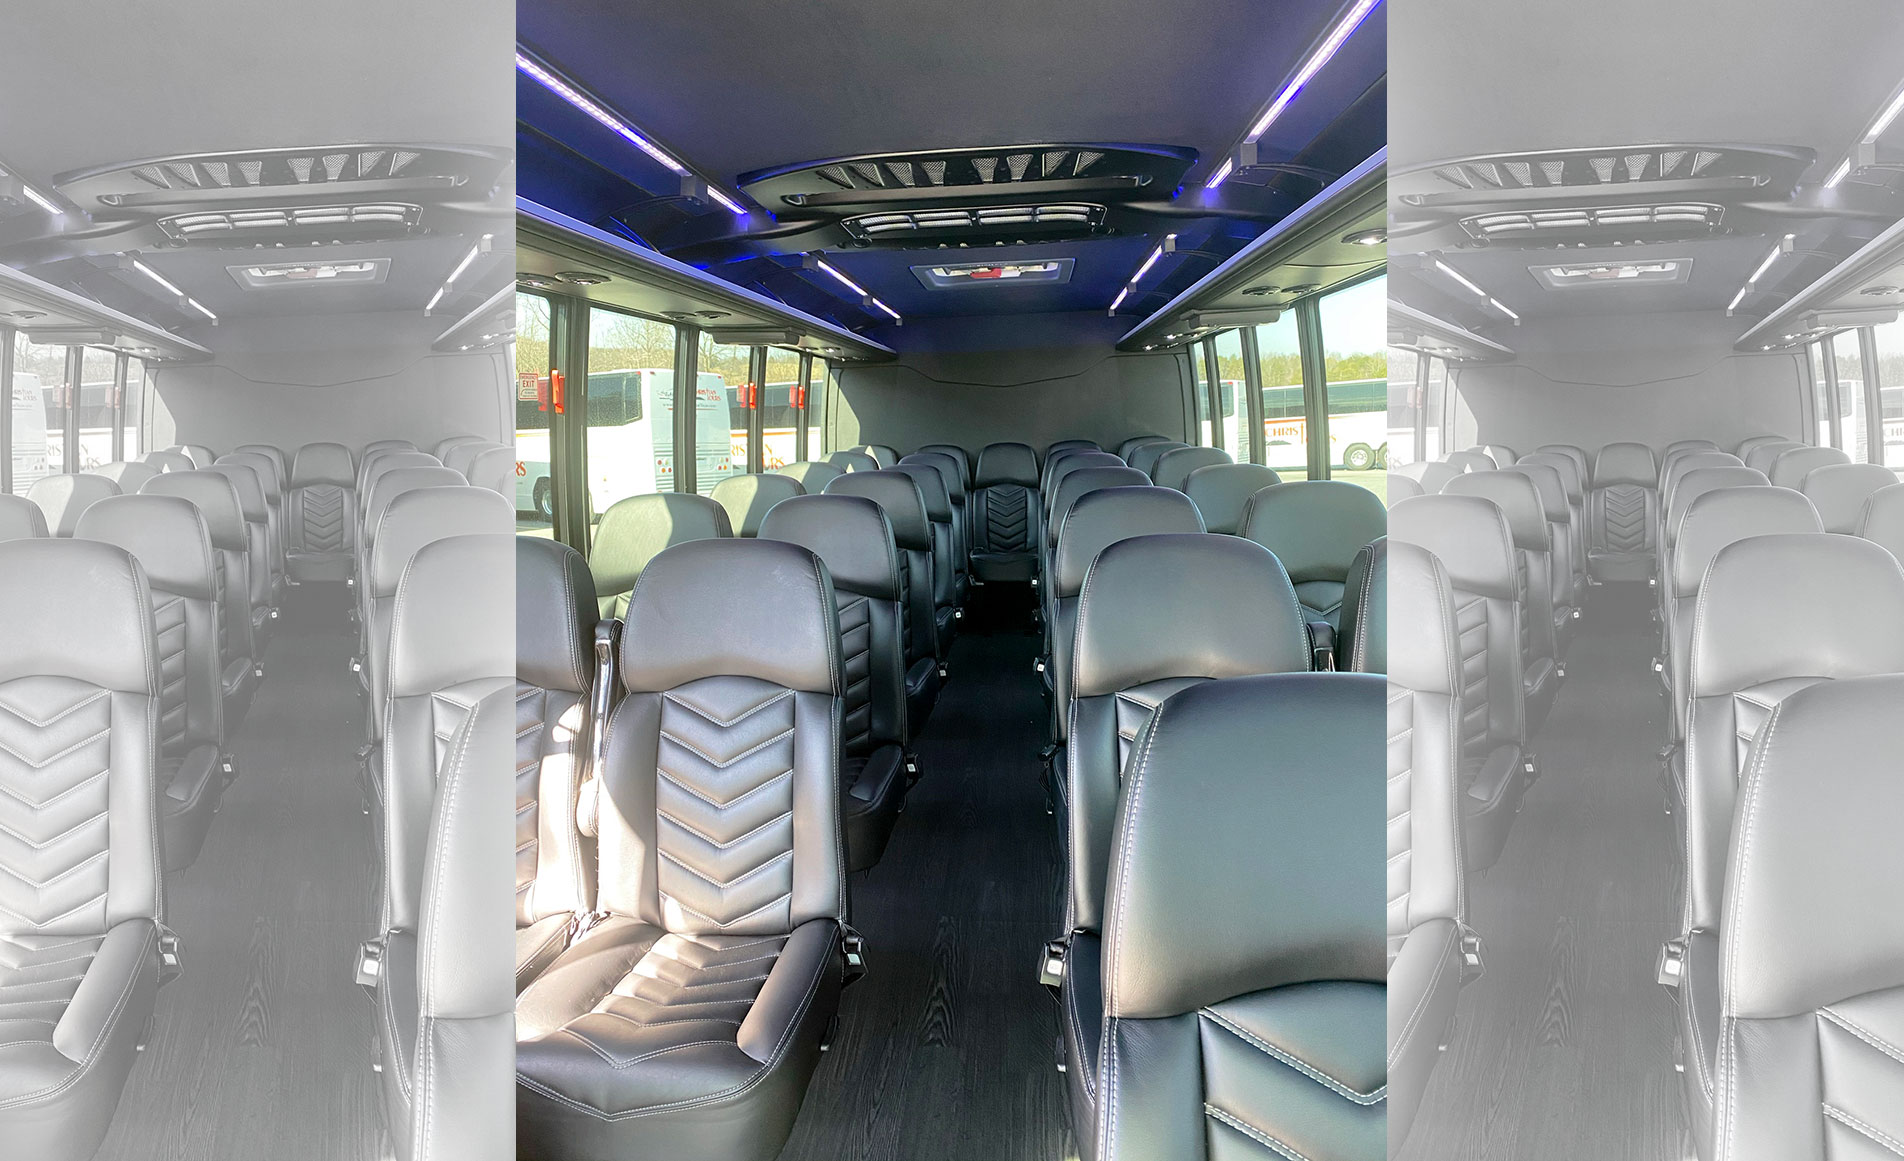 Our 24 & 25 passenger Minicoaches